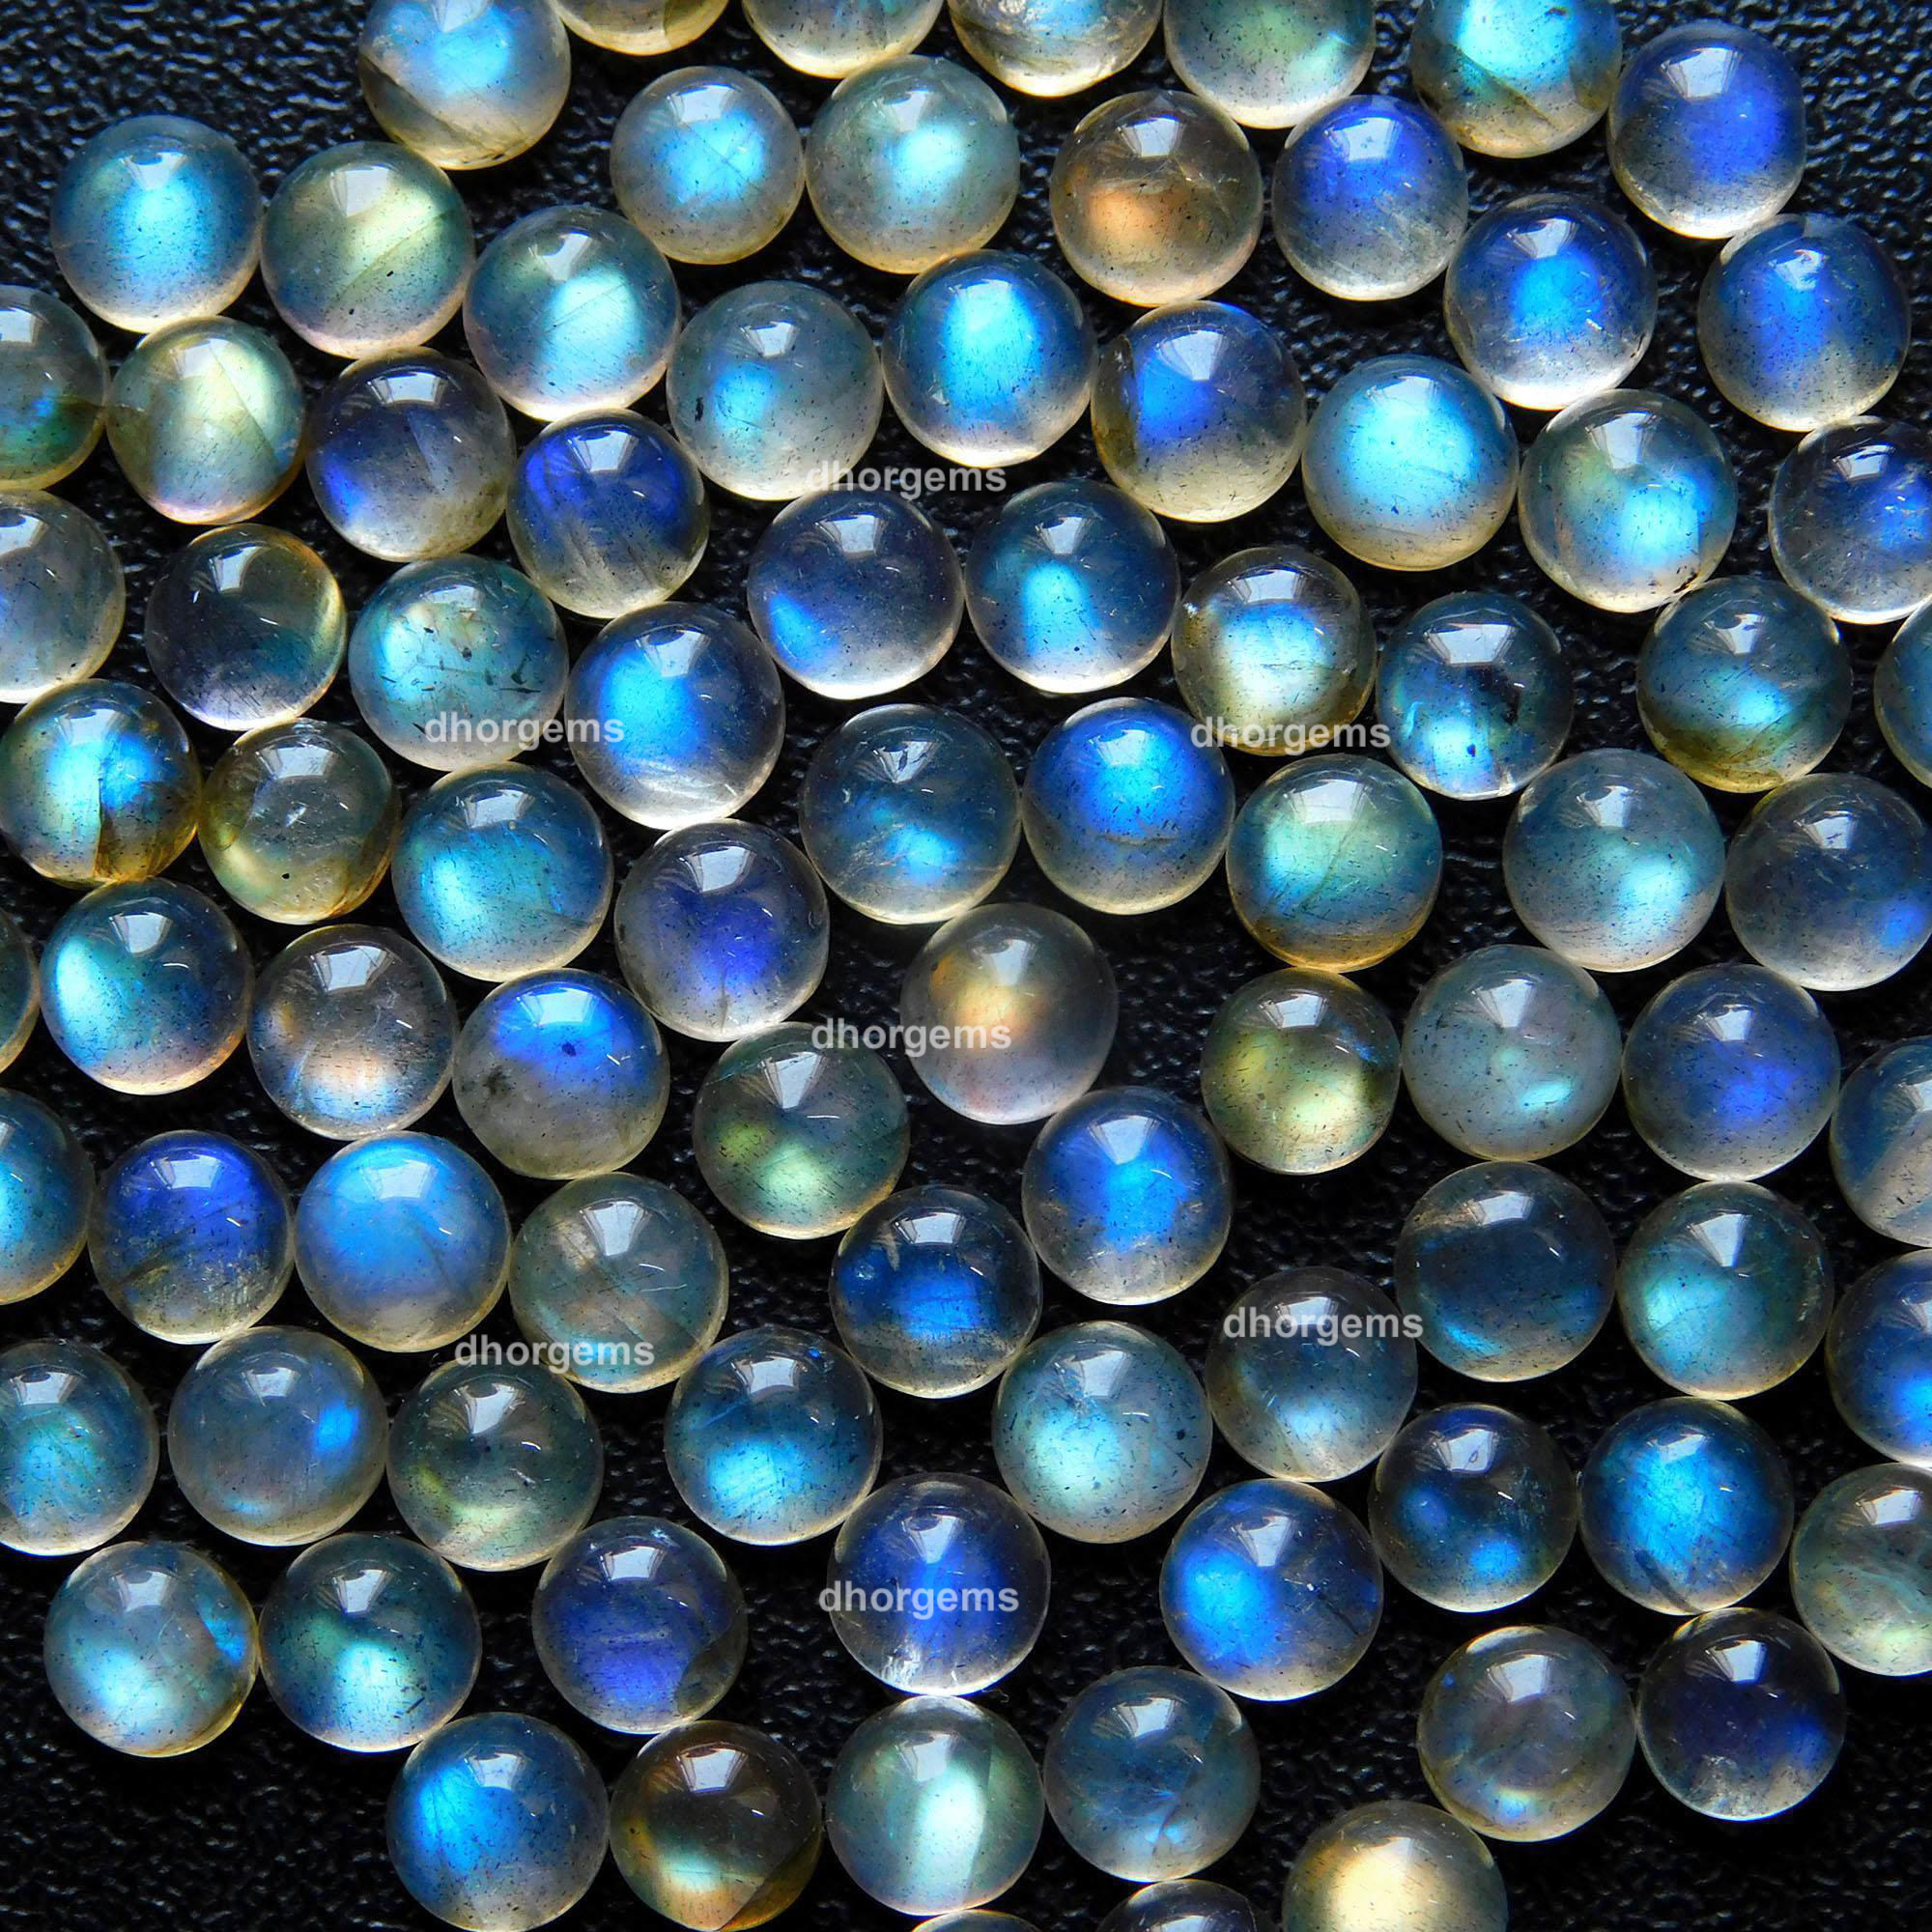 89Pcs 56.45Cts Natural Blue Fire Labradorite Loose Cabochon Calibrated Round Shape Gemstone Lot 5mm#9145